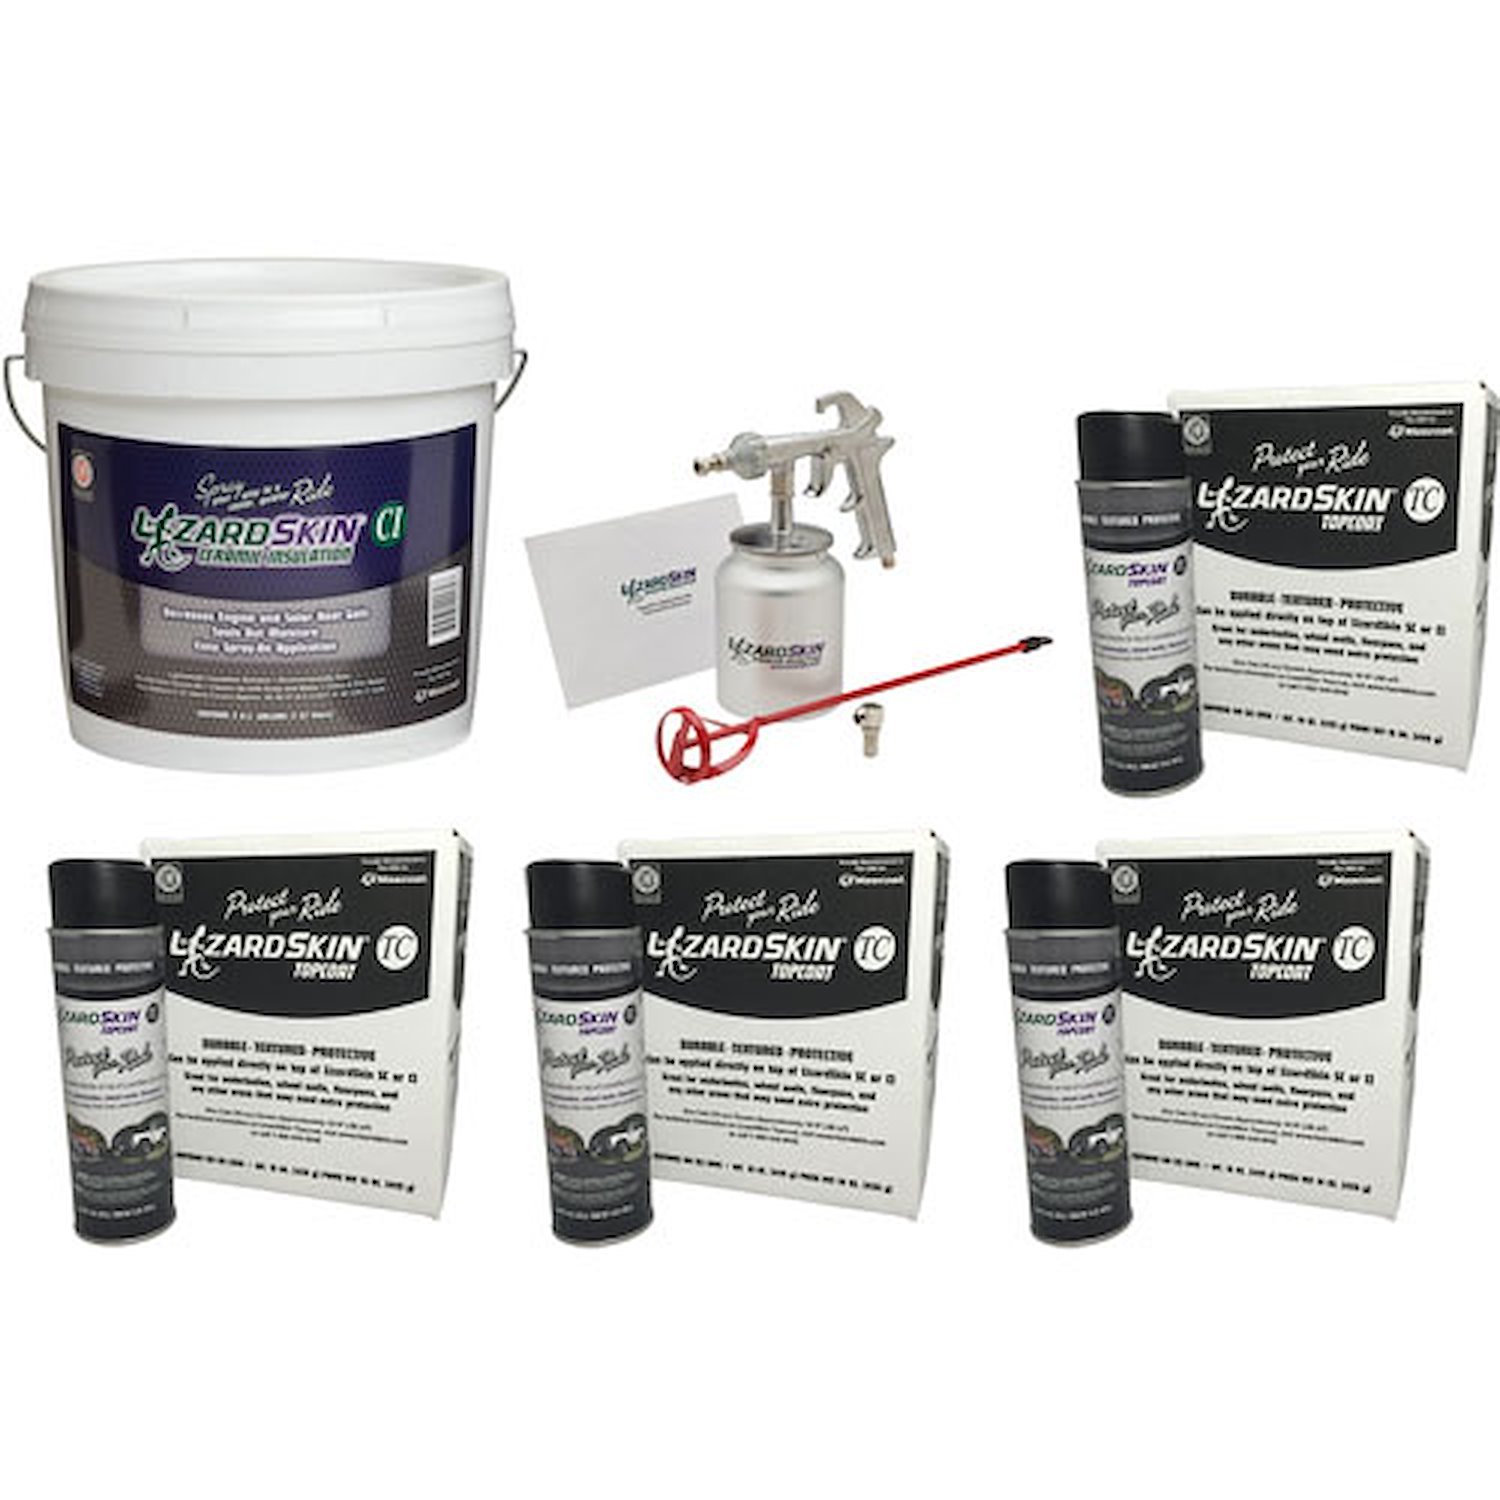 Ceramic Insulation And Gun Kit Includes: White Ceramic Insulation (2 Gallon)